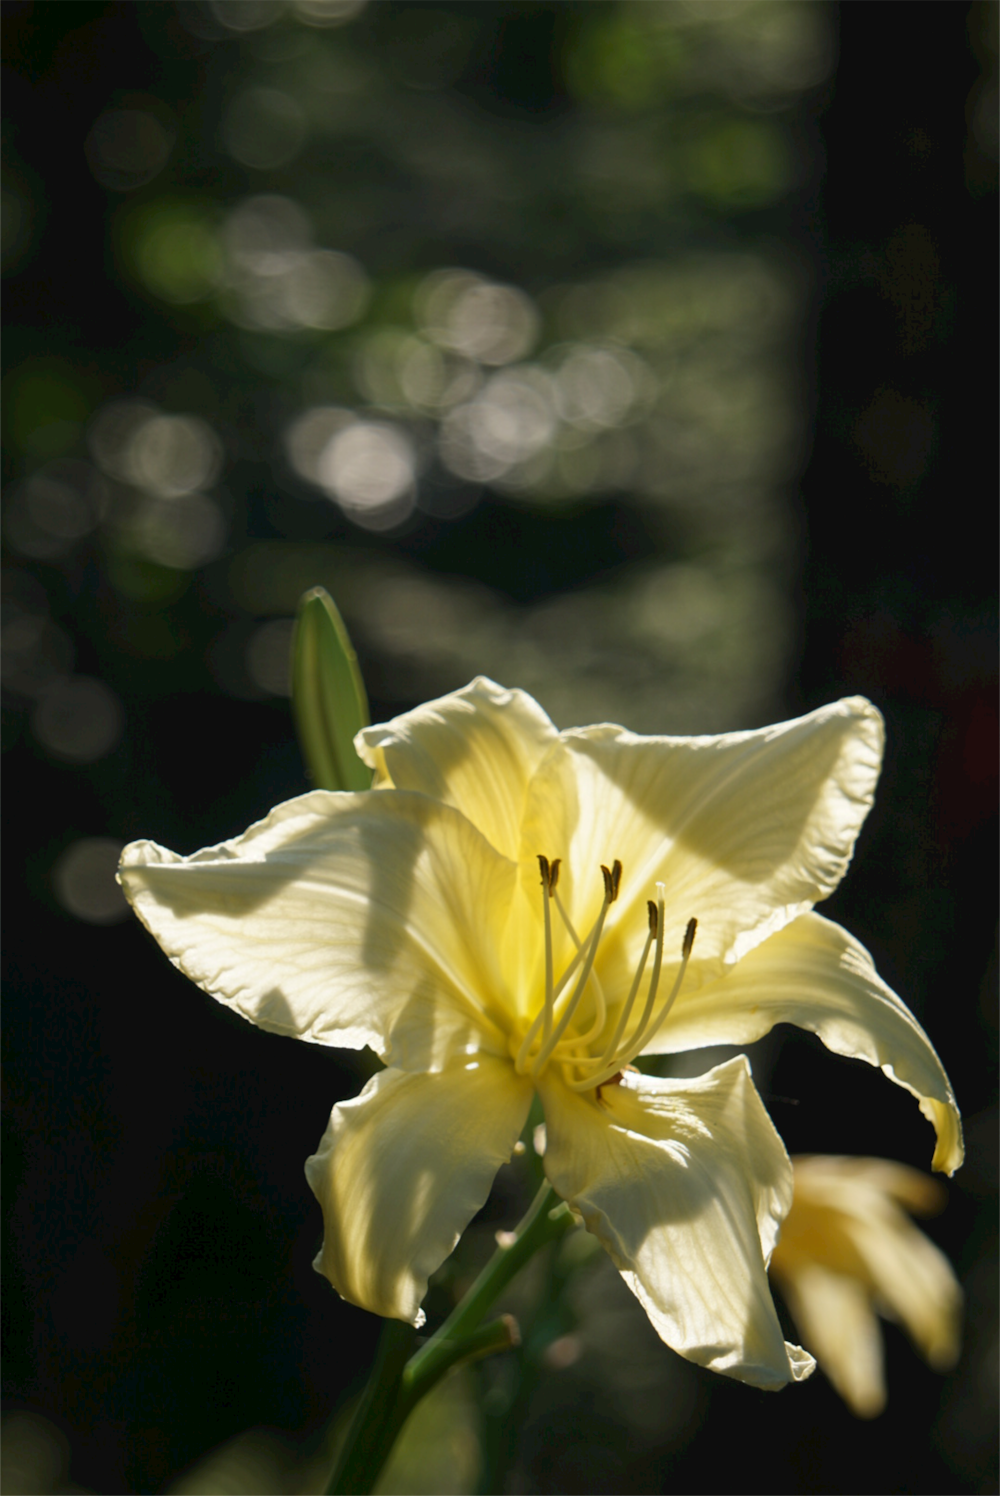 fiore bianco e giallo in lente tilt shift